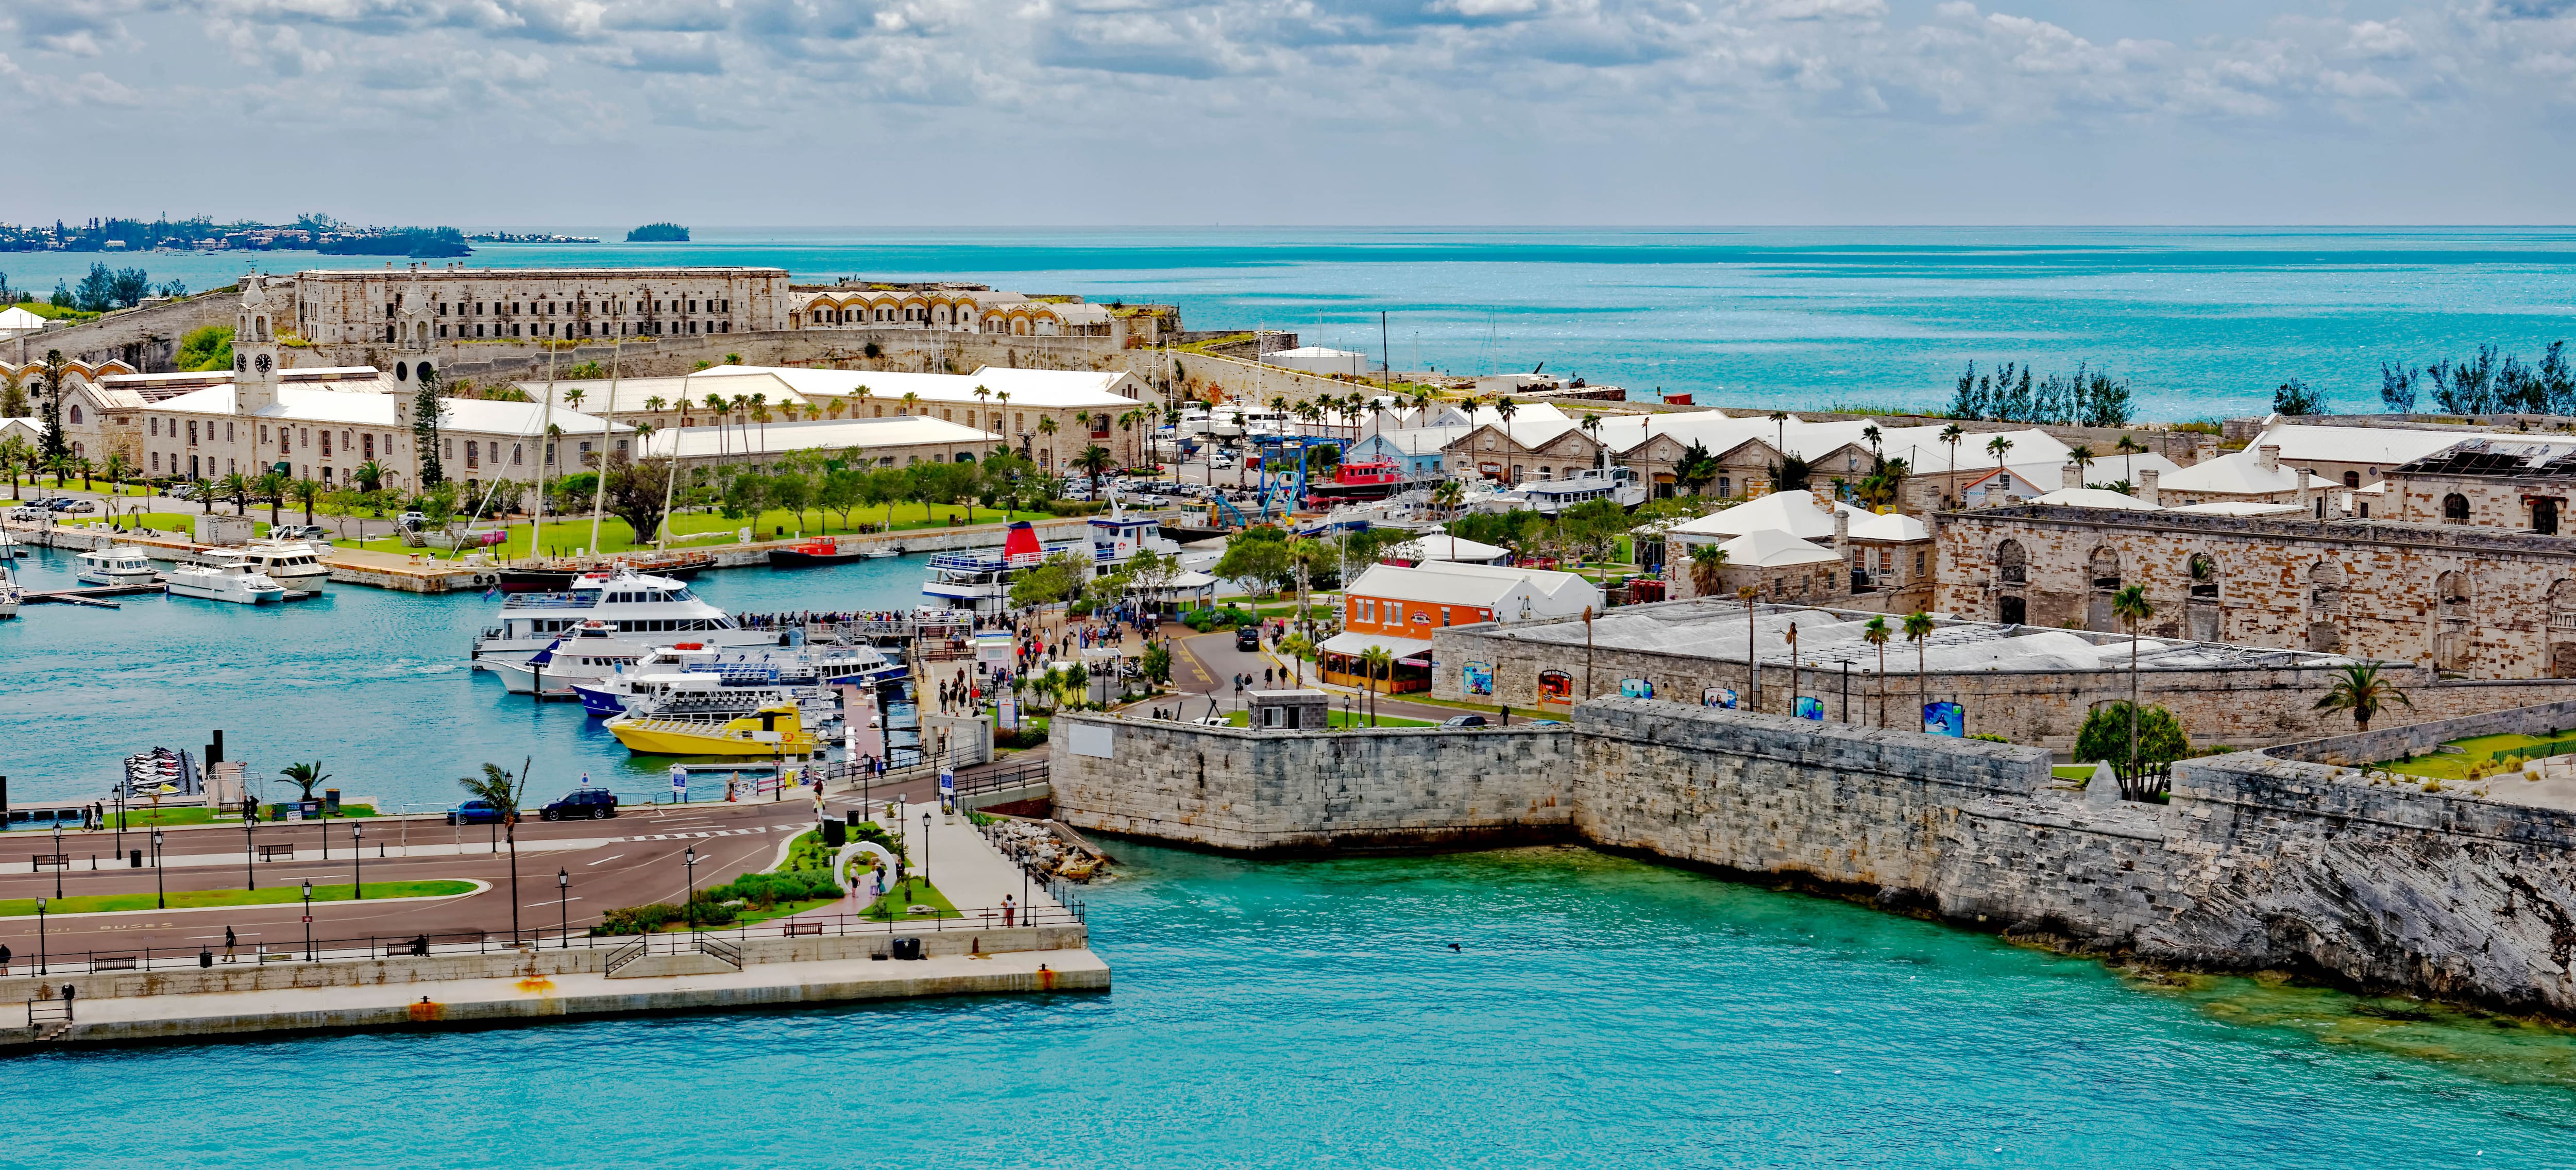 12-Day Caribbean From New York to Miami: Curacao, Aruba & Bermuda